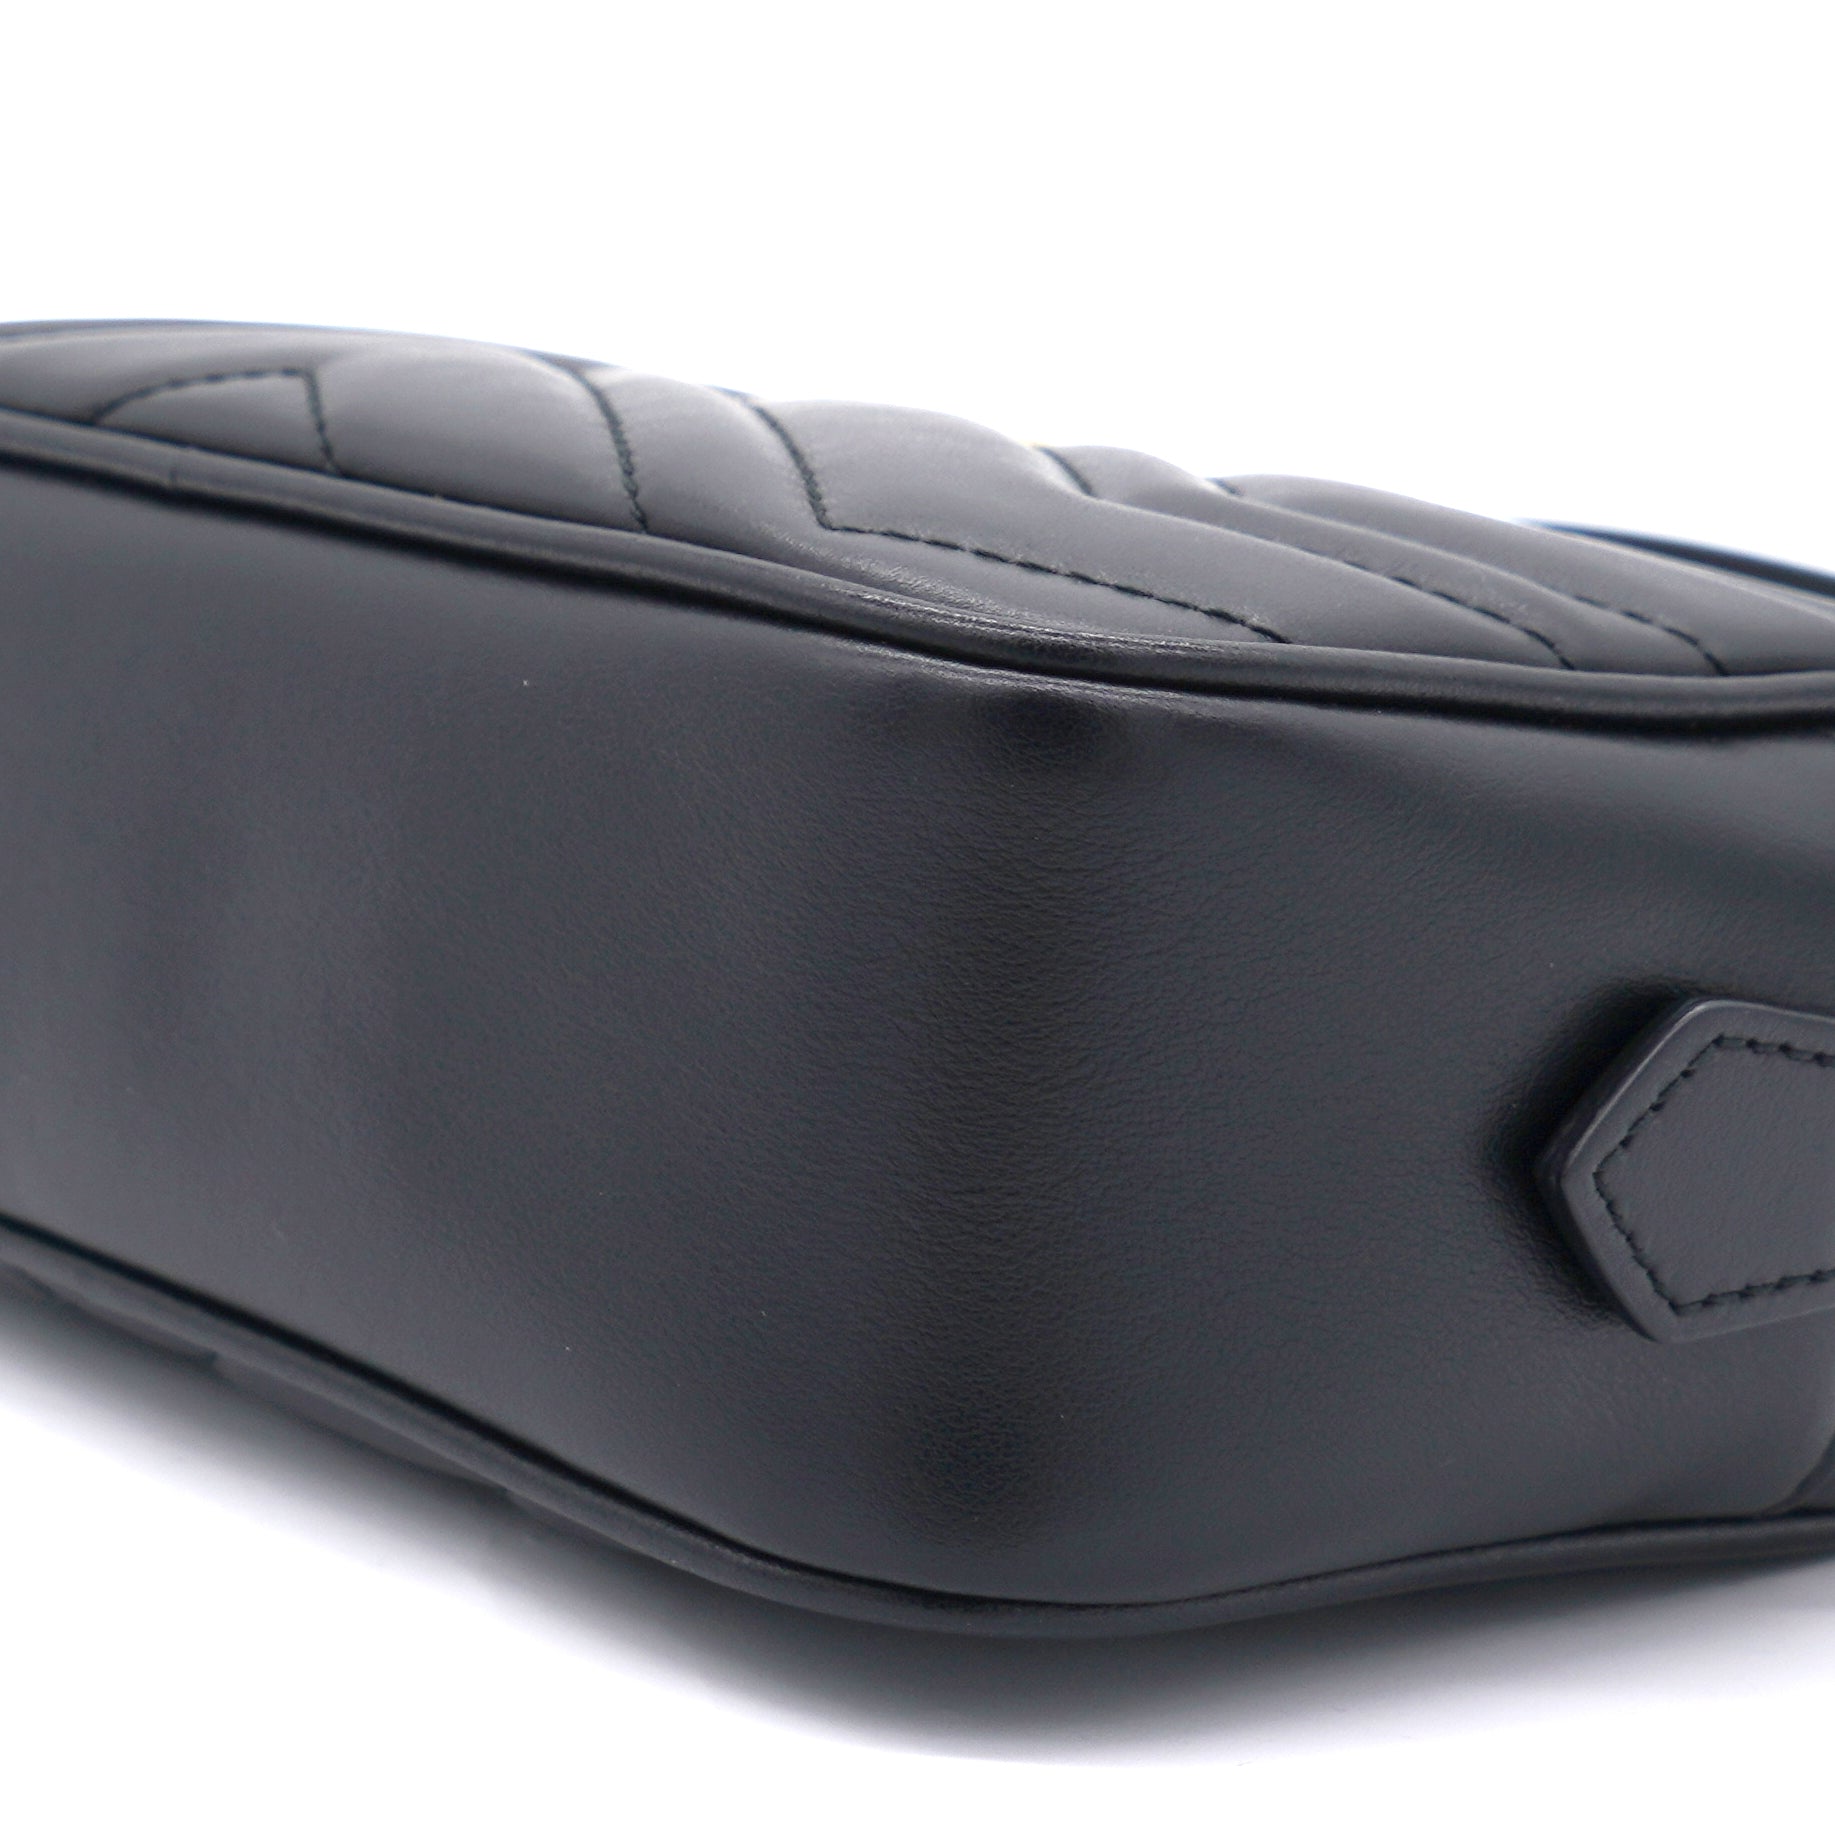 Black Matelassé Leather Mini GG Marmont Camera Crossbody Bag